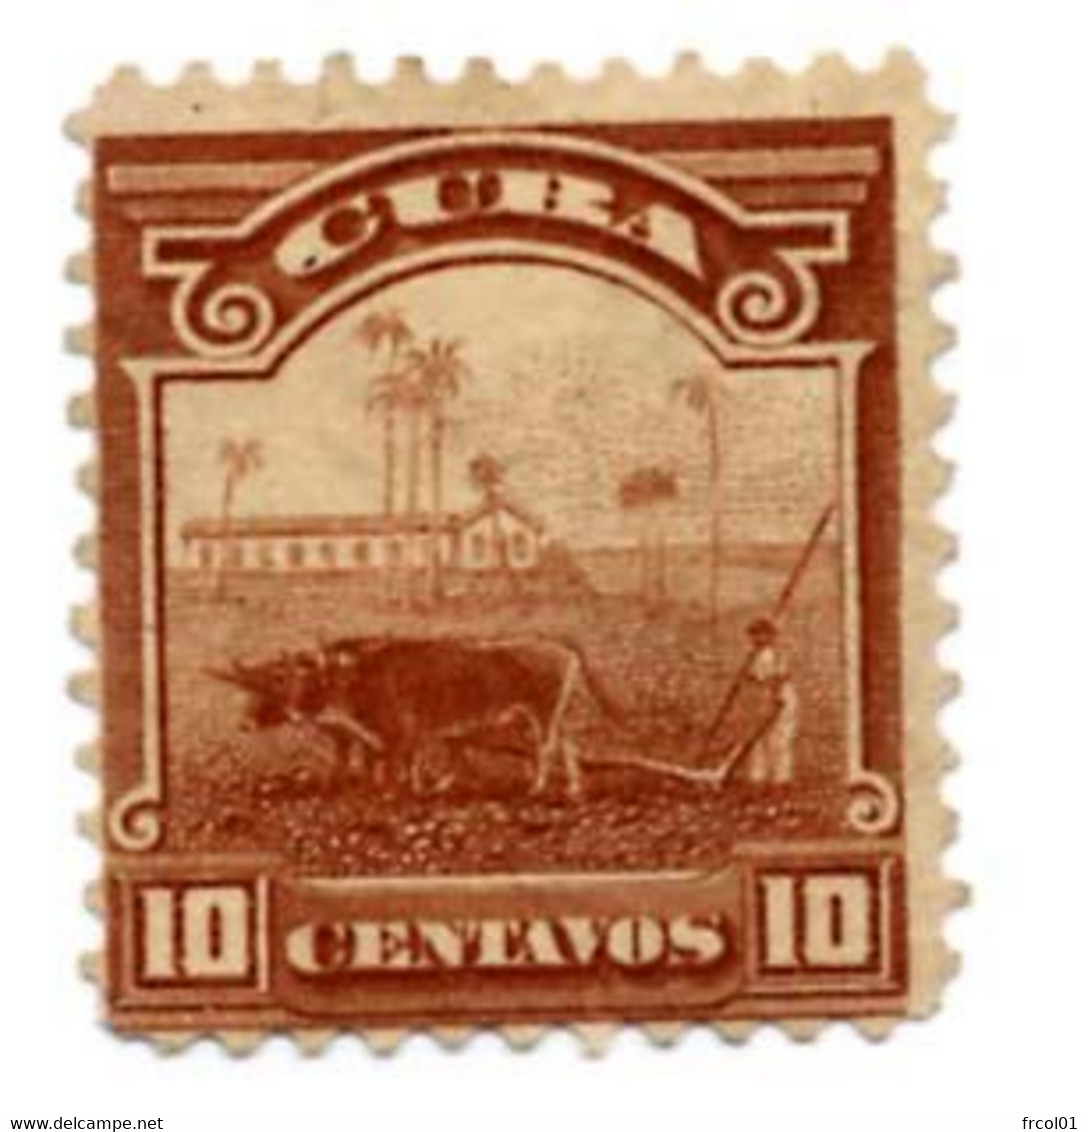 Cuba, Yvert 146, Scott 231, MNH - Unused Stamps